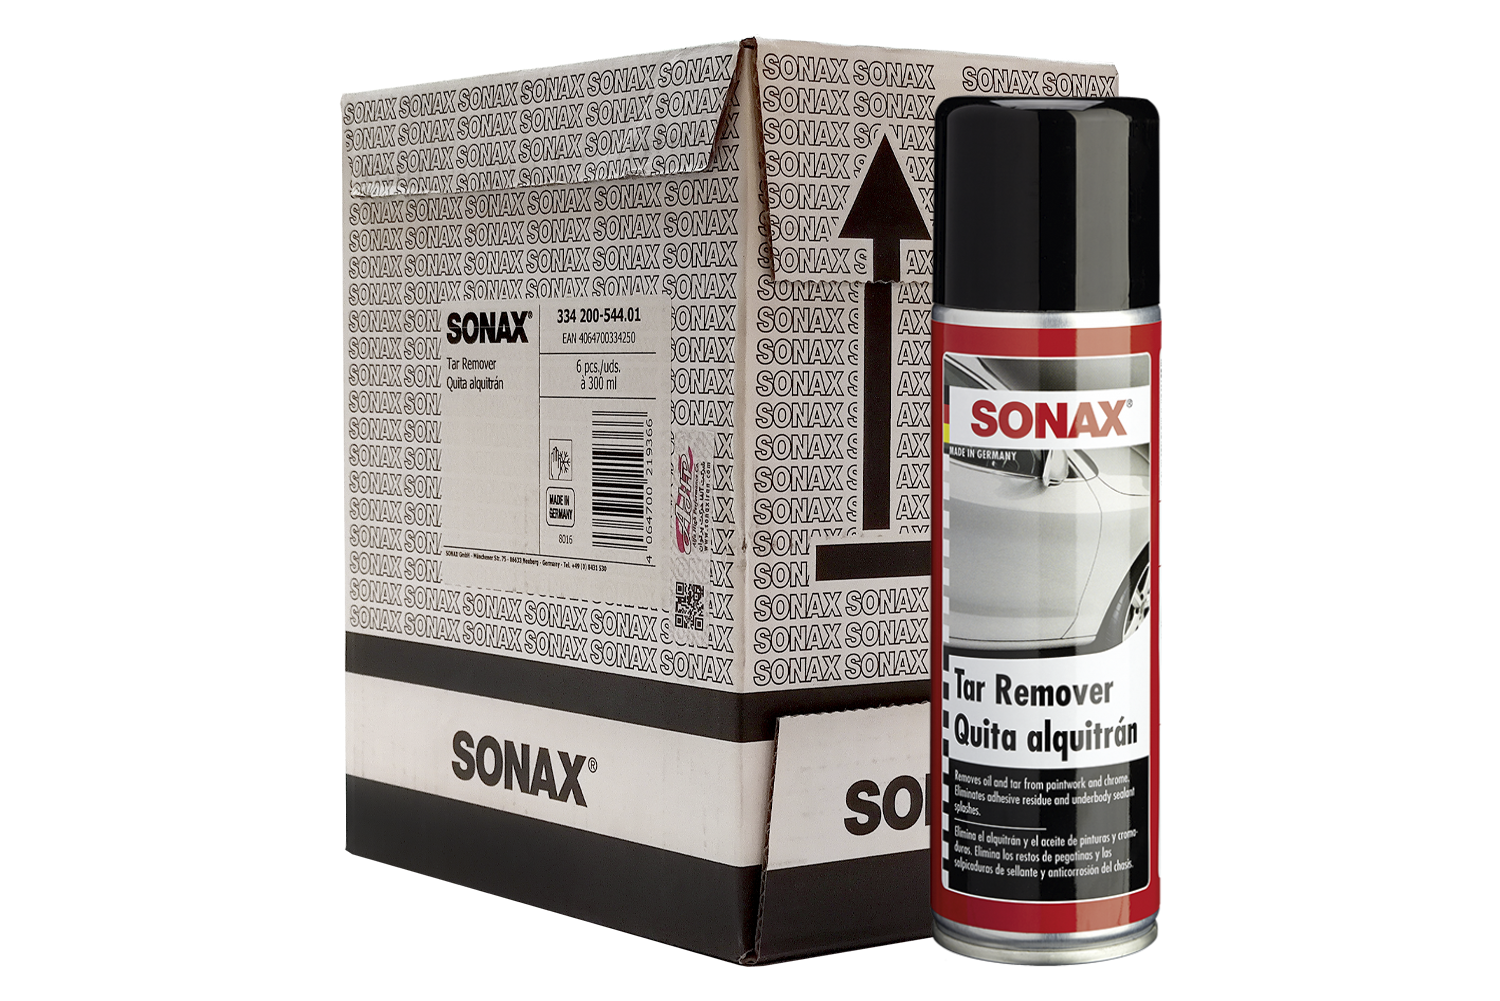 کارتن 6 عددی اسپری پاک کننده قیر سوناکس SONAX Tar Remover